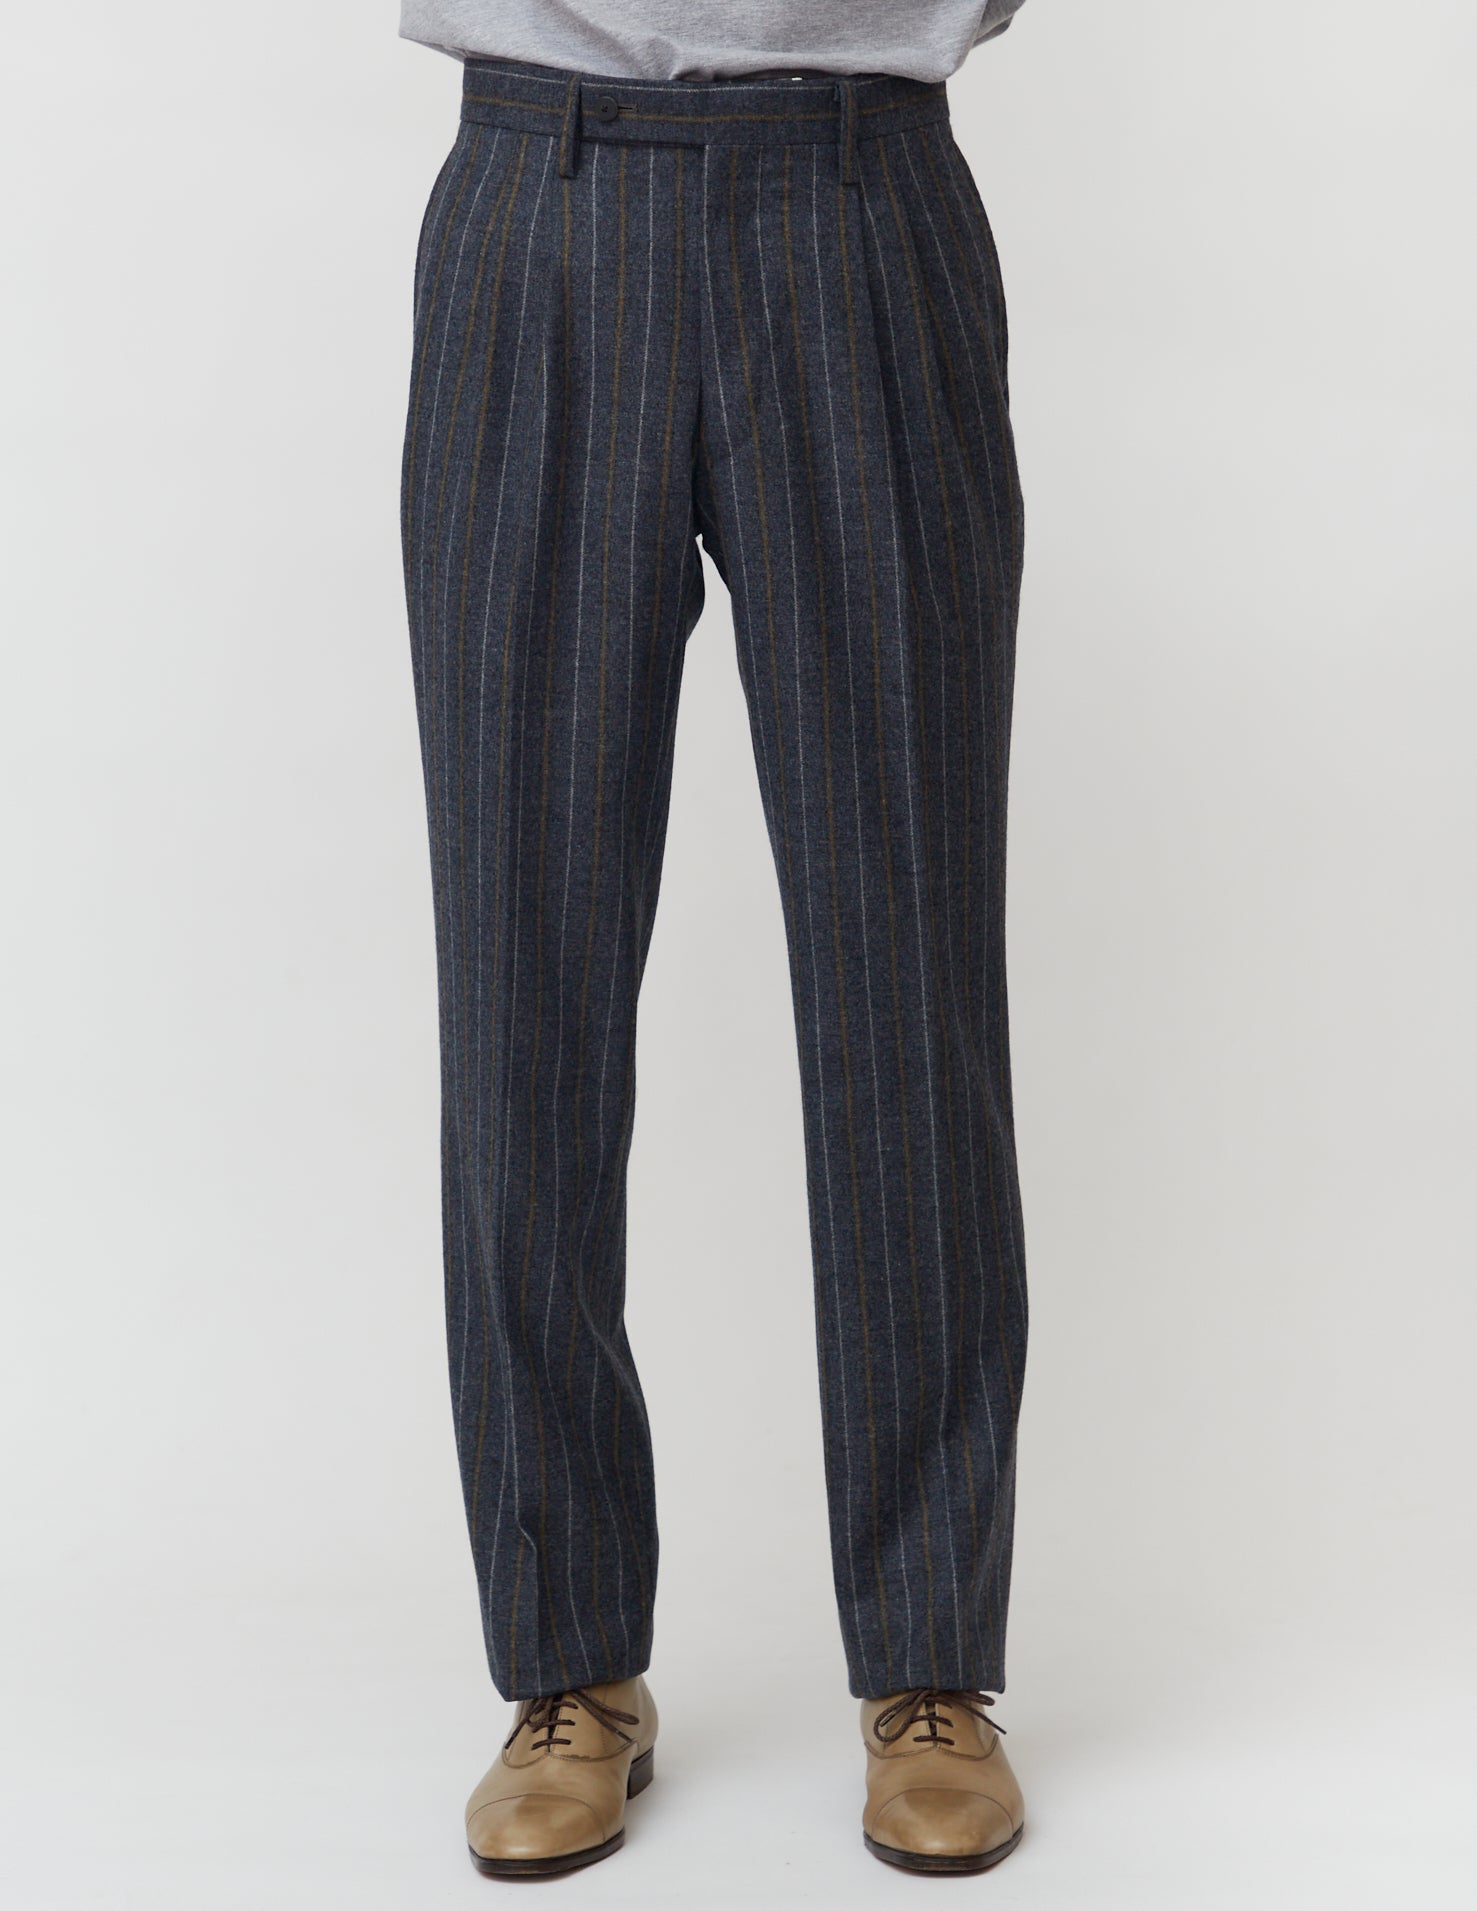 Tailored pants charcoal gray x yellow&white stripe